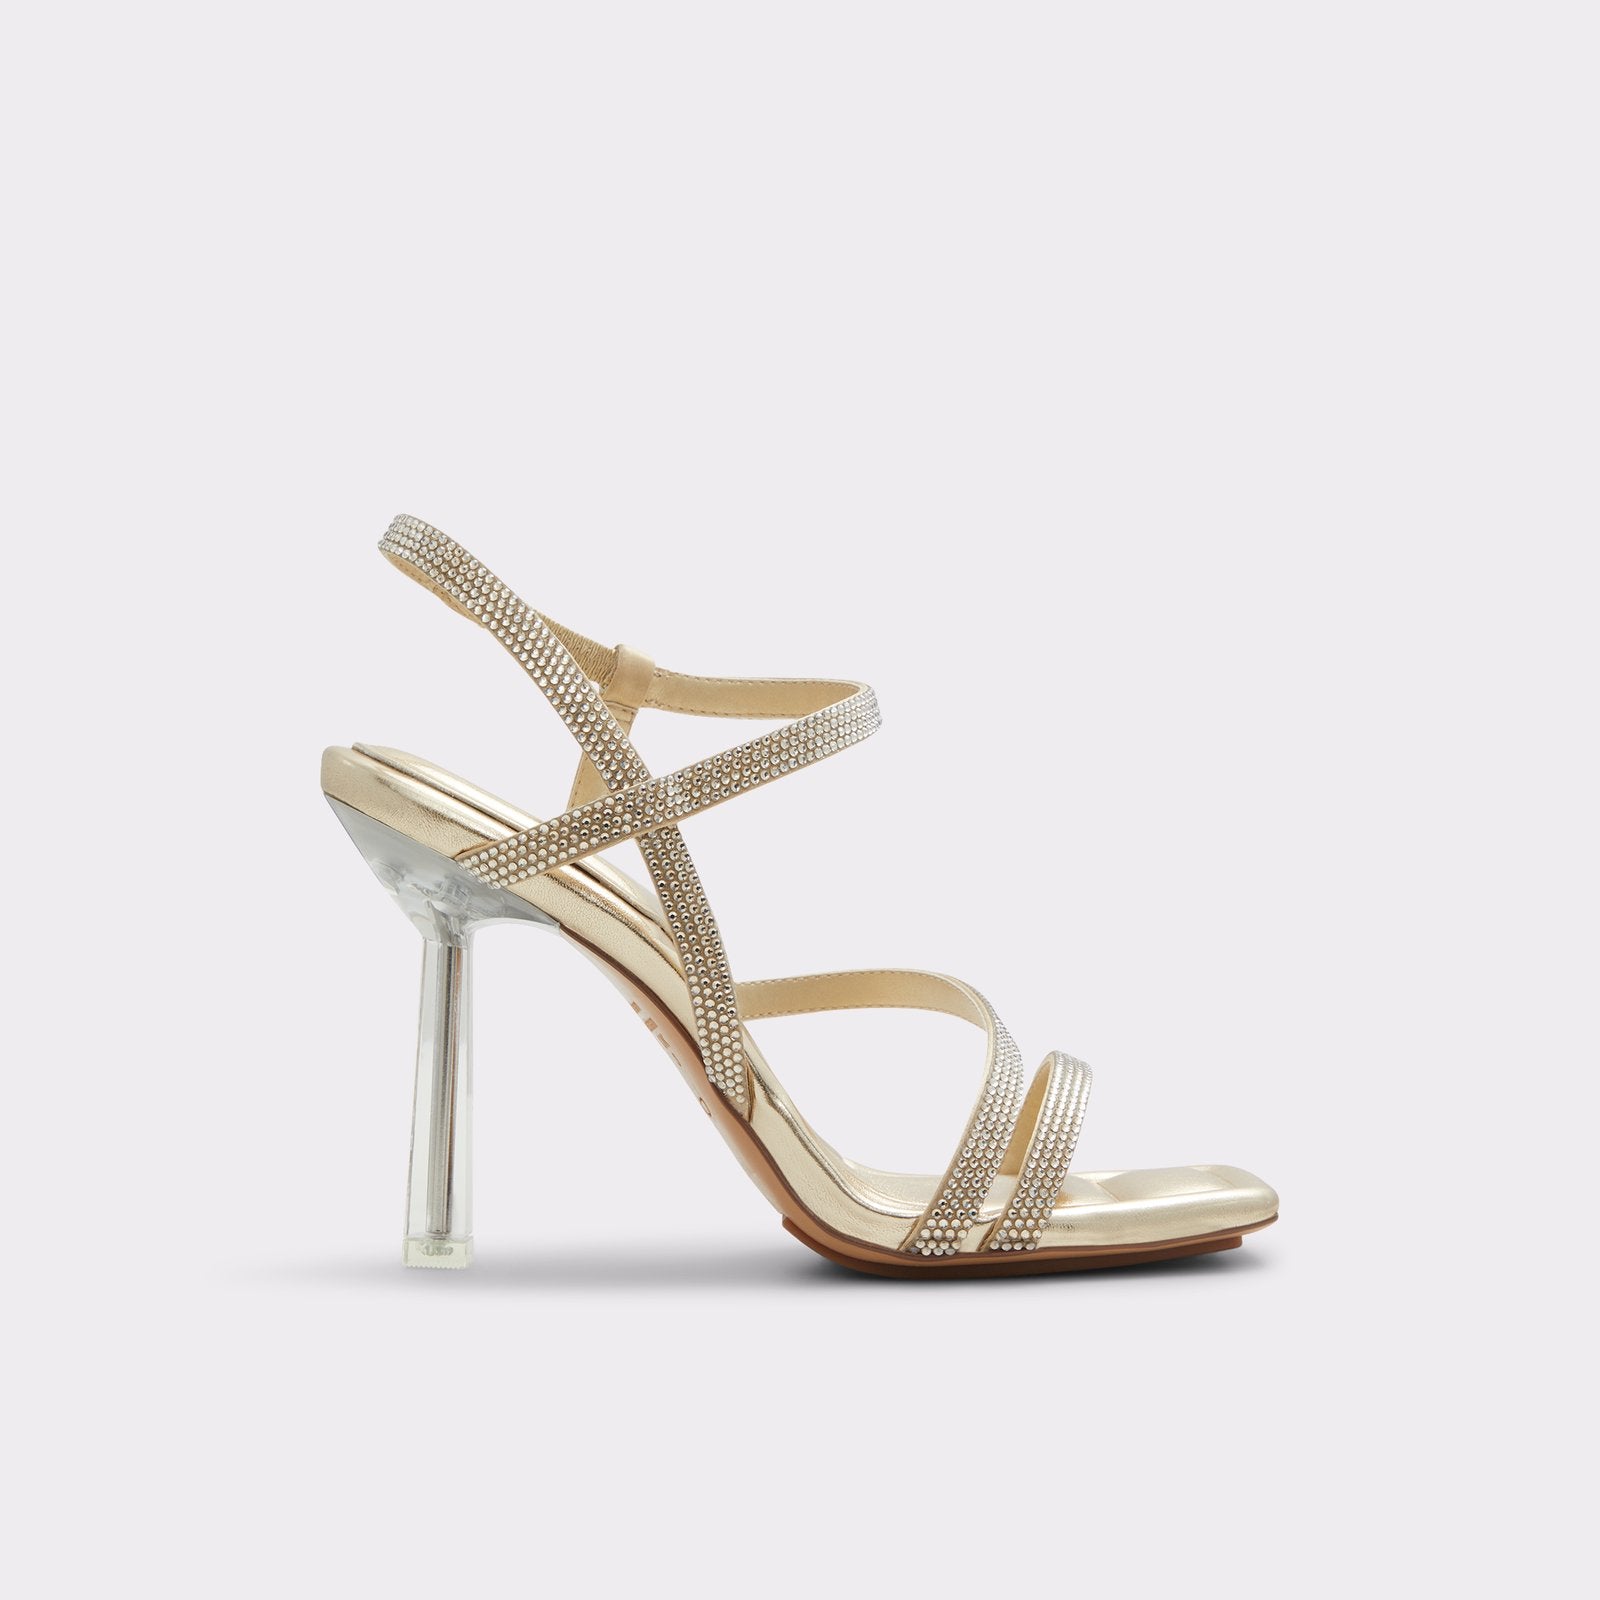 Adrocan / Heeled Sandals Women Shoes - Champagne - ALDO KSA